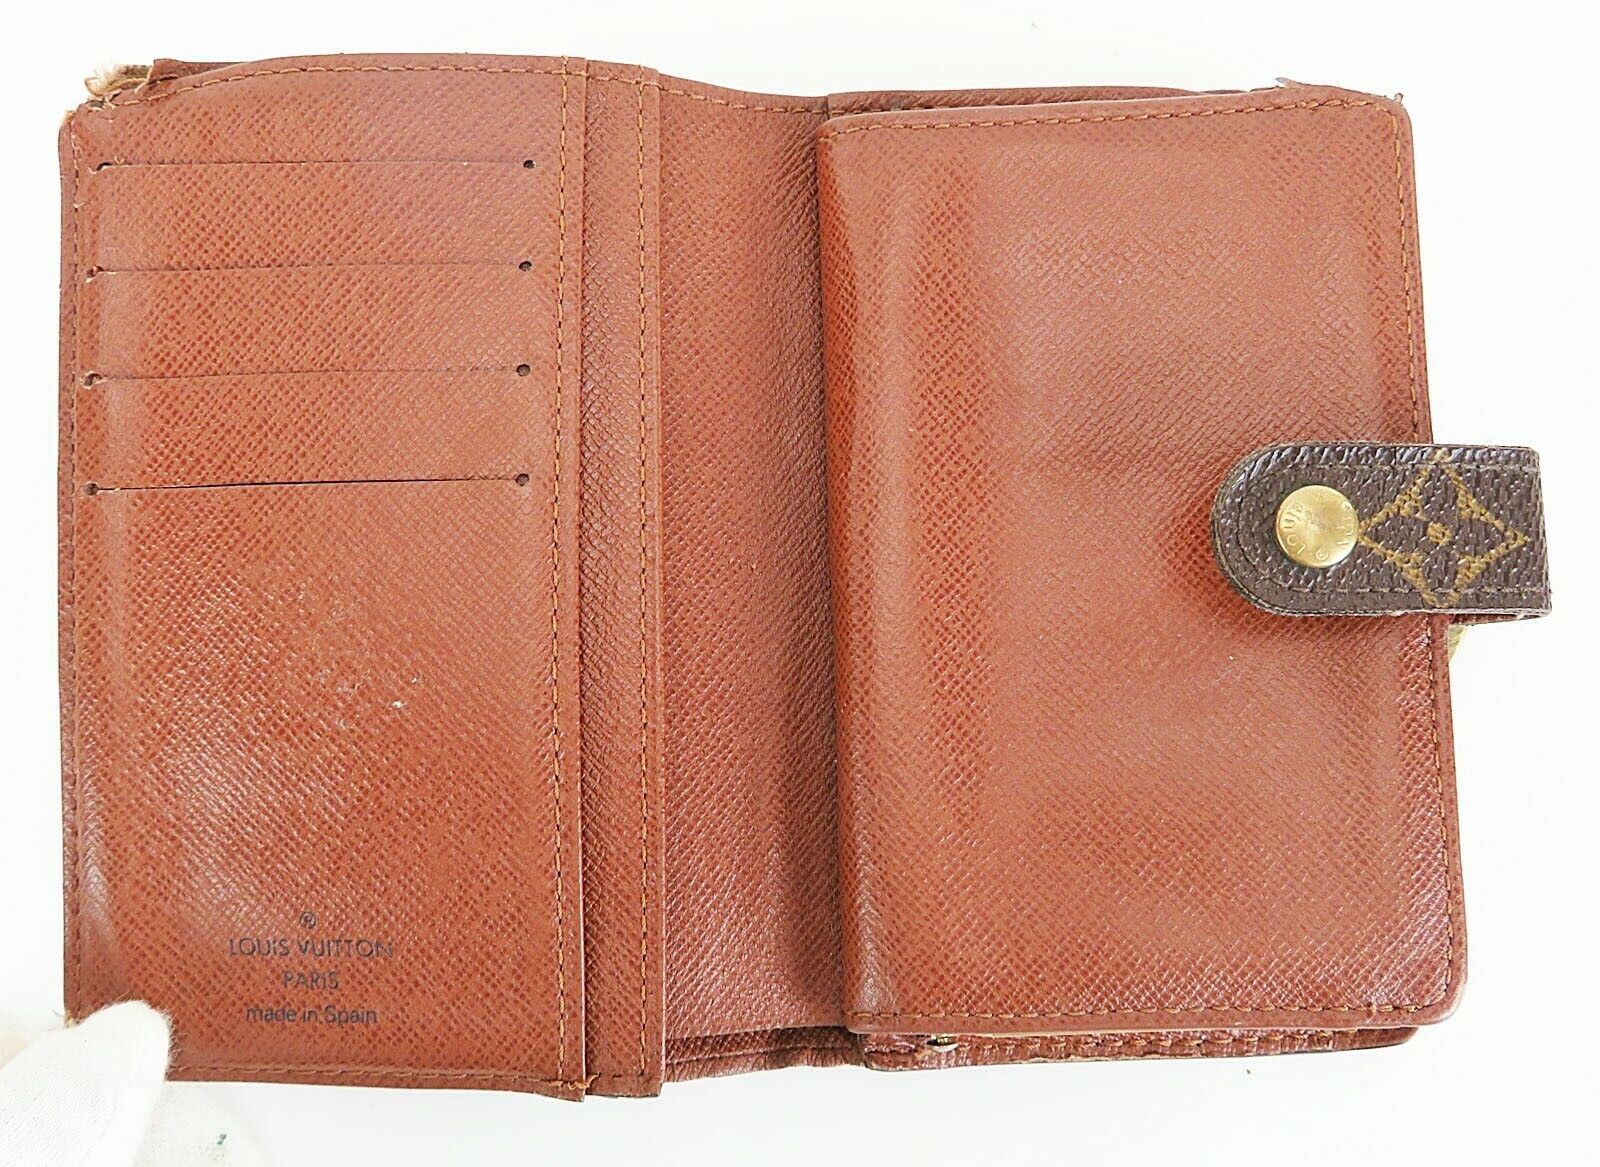 Authentic LOUIS VUITTON French Kisslock Monogram Wallet Coin Purse #28533 - Wallets